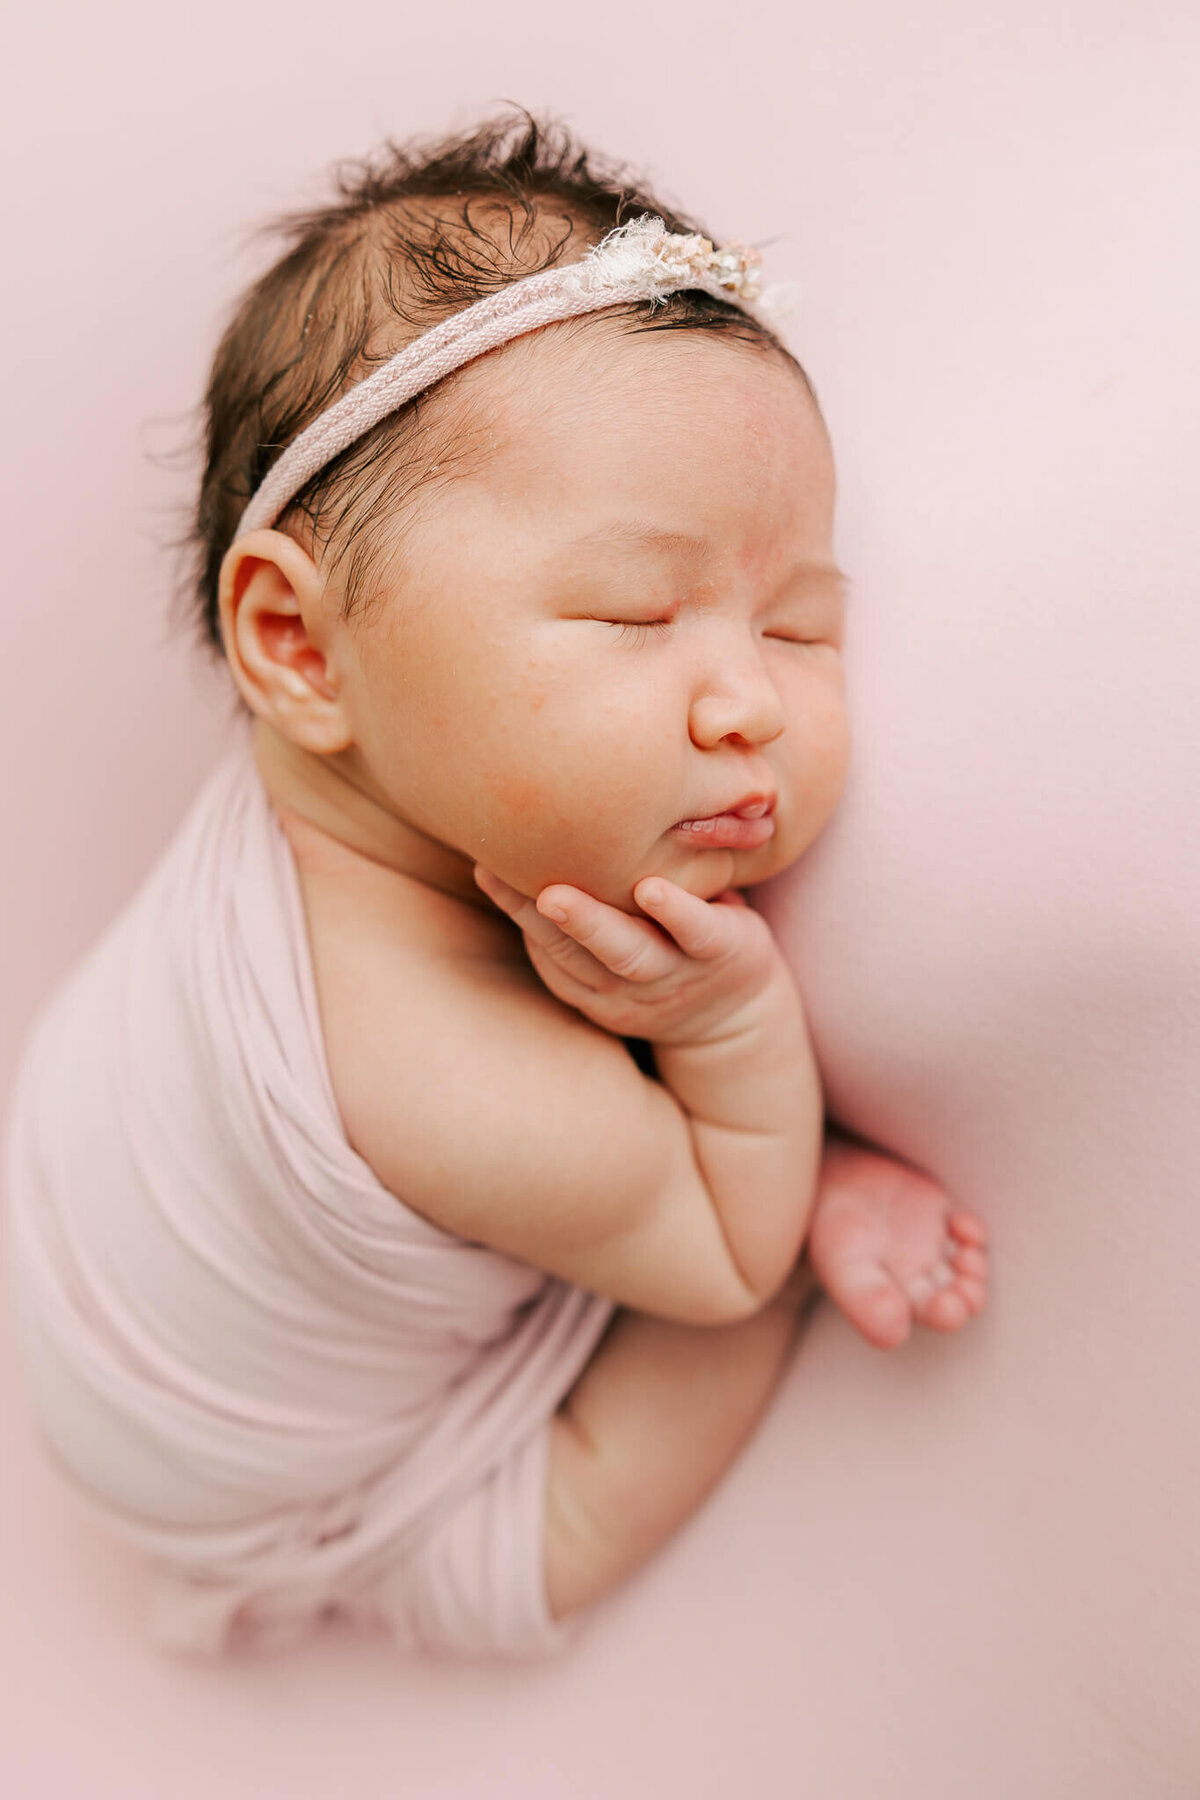 little newborn girl with headband on sleeping on pink blanket